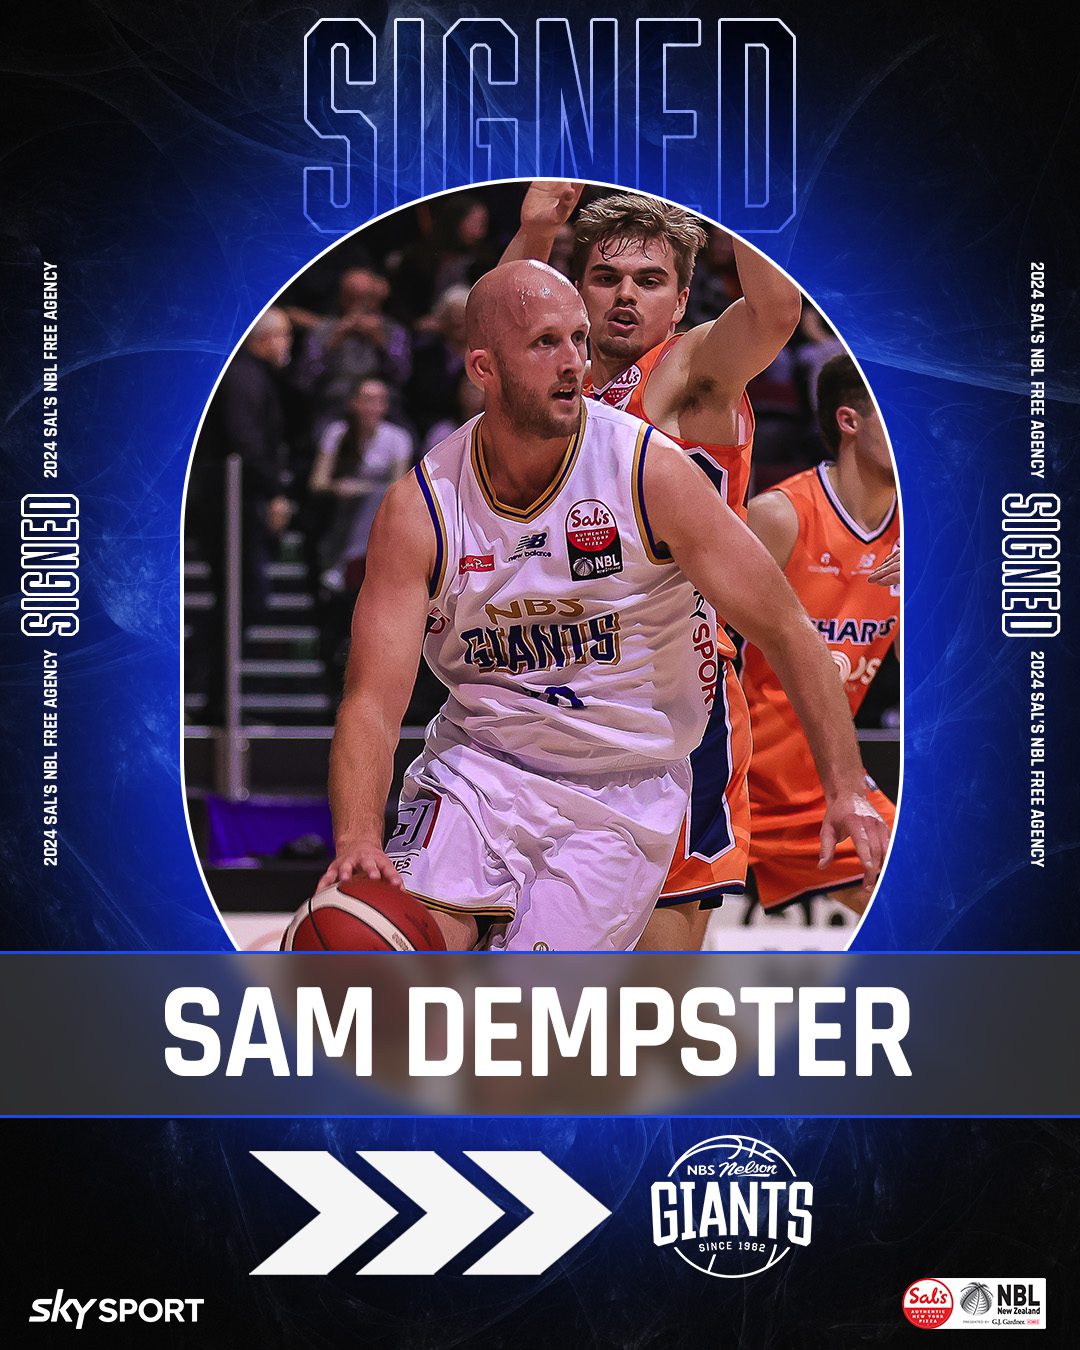 Sam Dempster